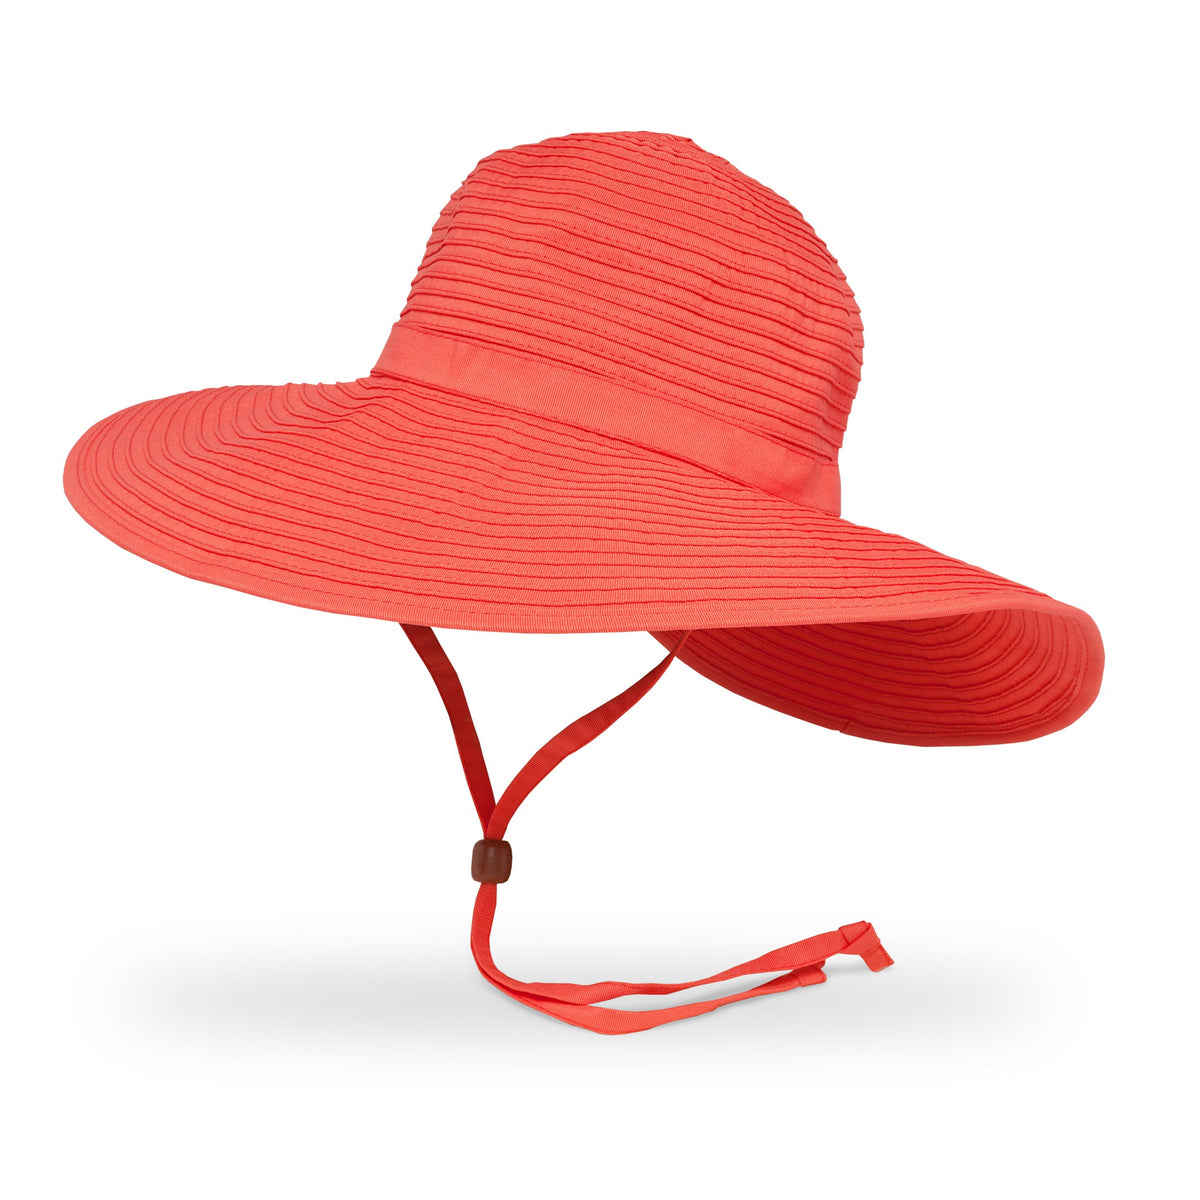 Sunday Afternoons Women's Beach Hat, Grapefruit